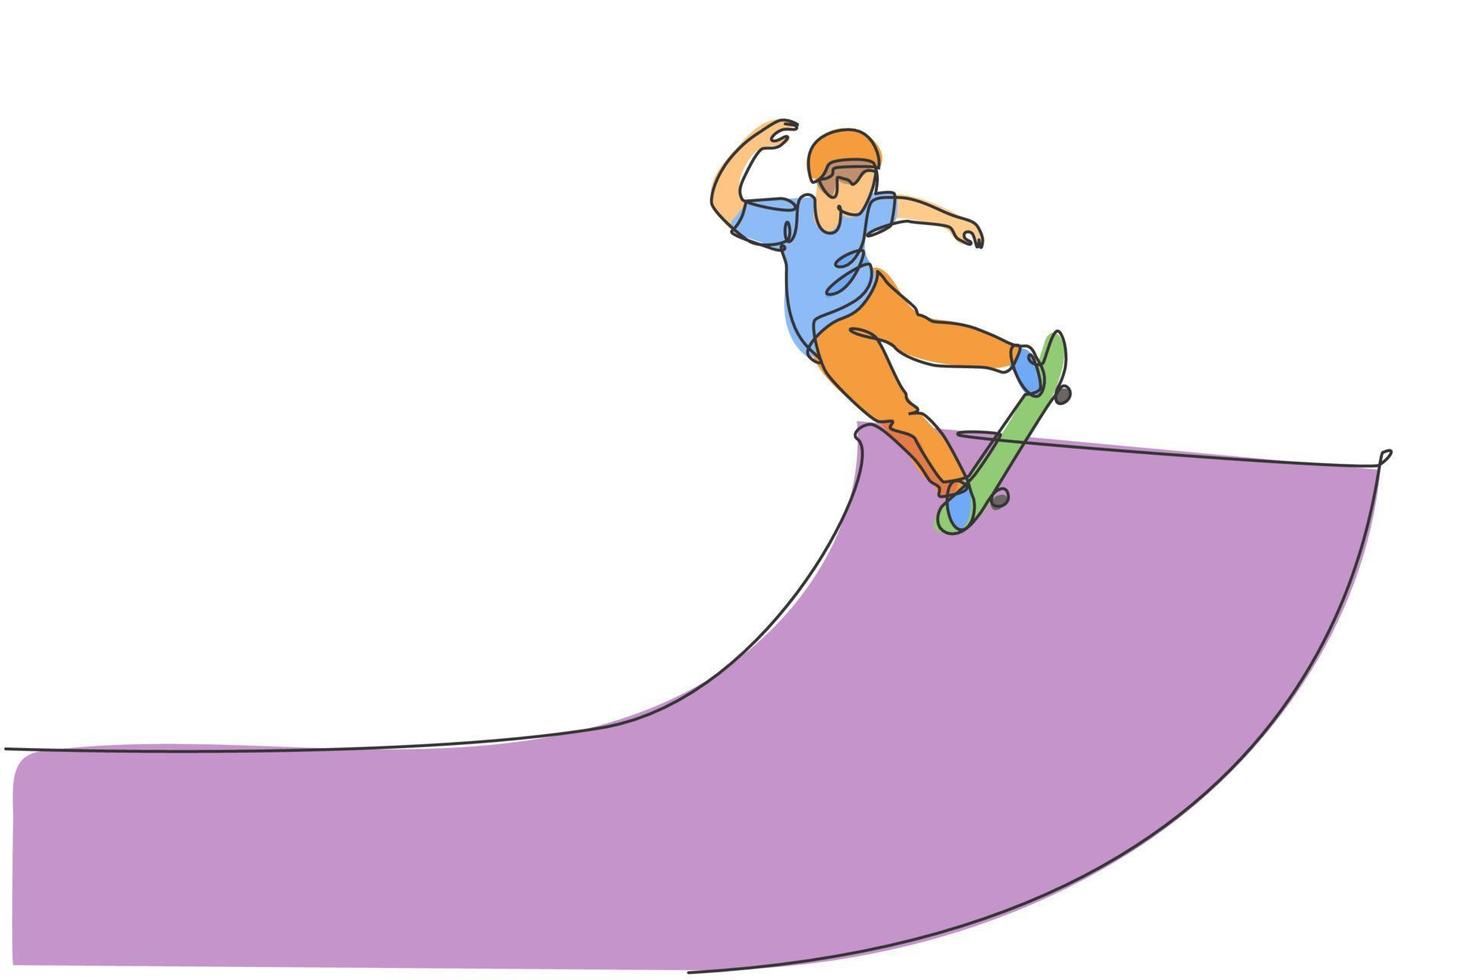 en enda linjeteckning av ung skateboardåkare man motion rider skateboard i staden gata vektorillustration. extrem tonåring livsstil och utomhus sport koncept. modern kontinuerlig linjeritningsdesign vektor